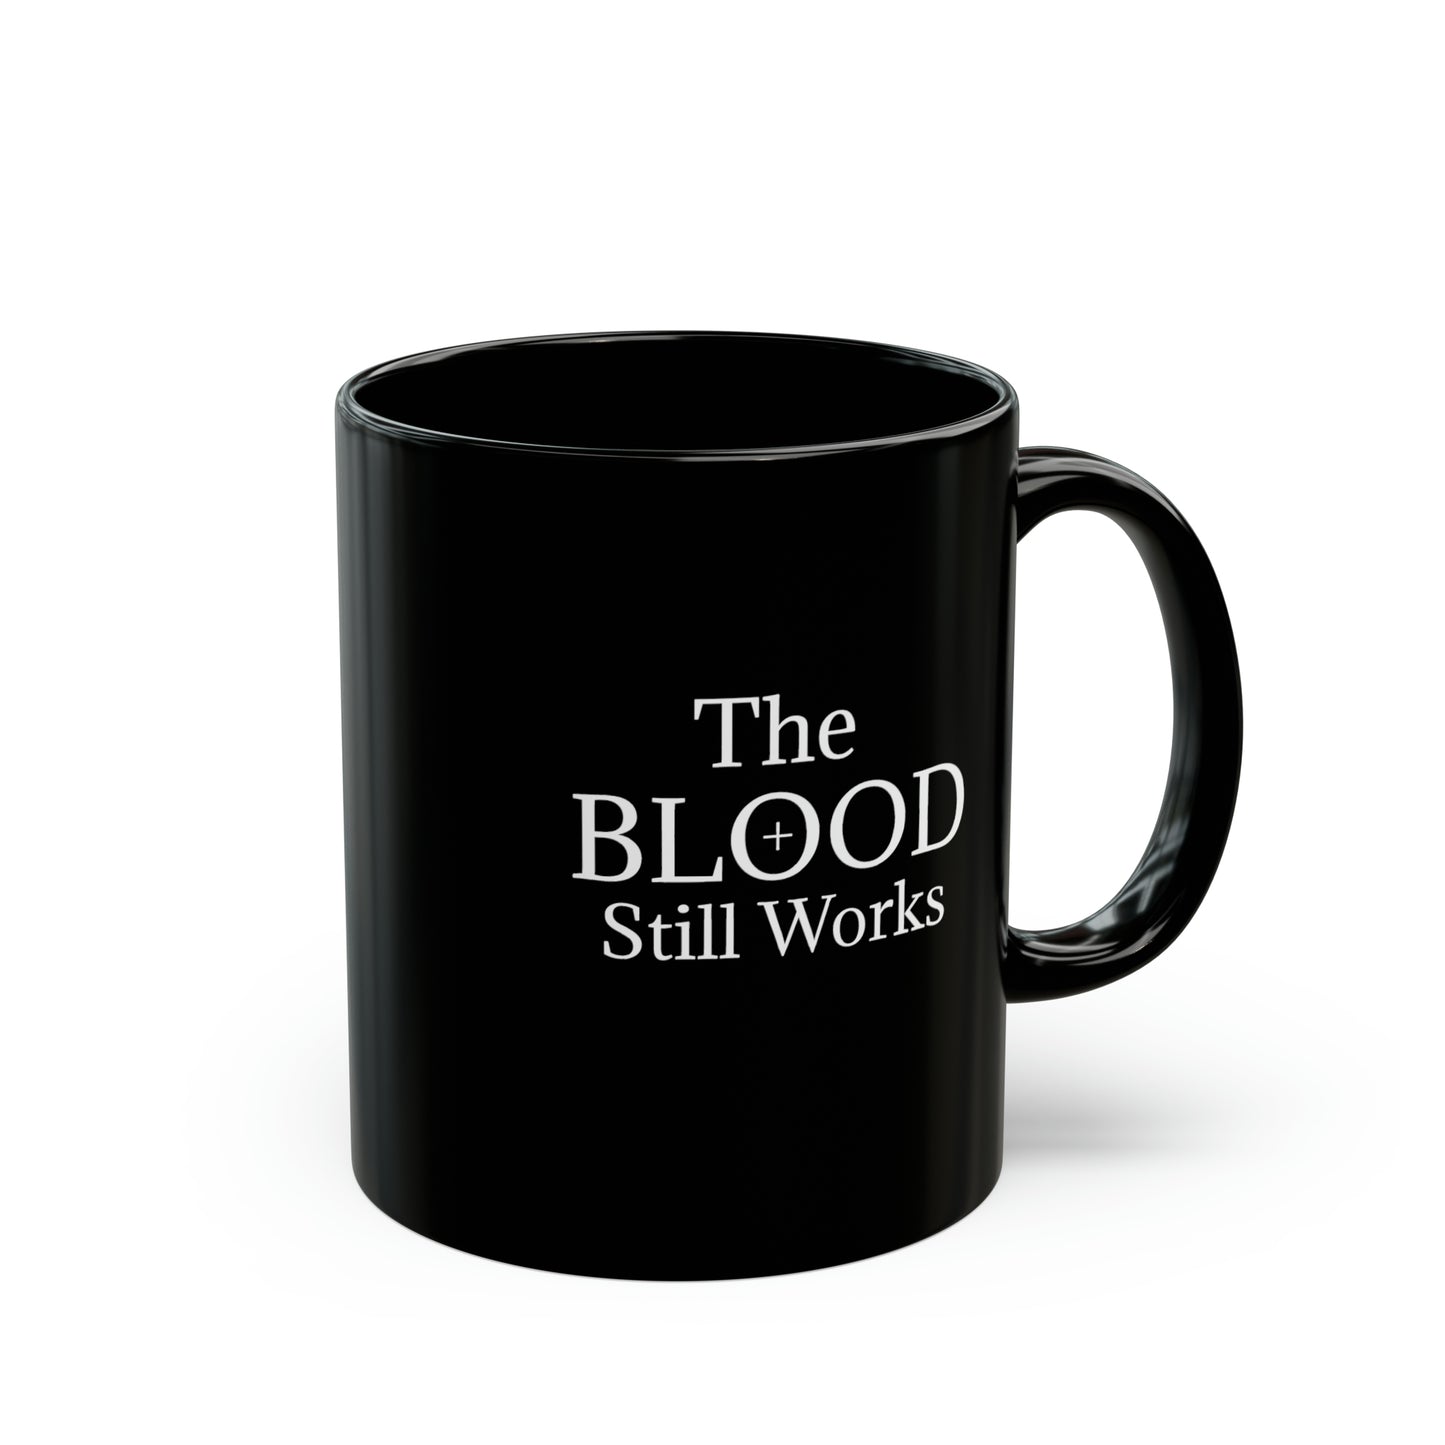 The Blood Still Works Mug Christian Mug Ceramic Mug, Easter Jesus Mug Black Mug 11oz